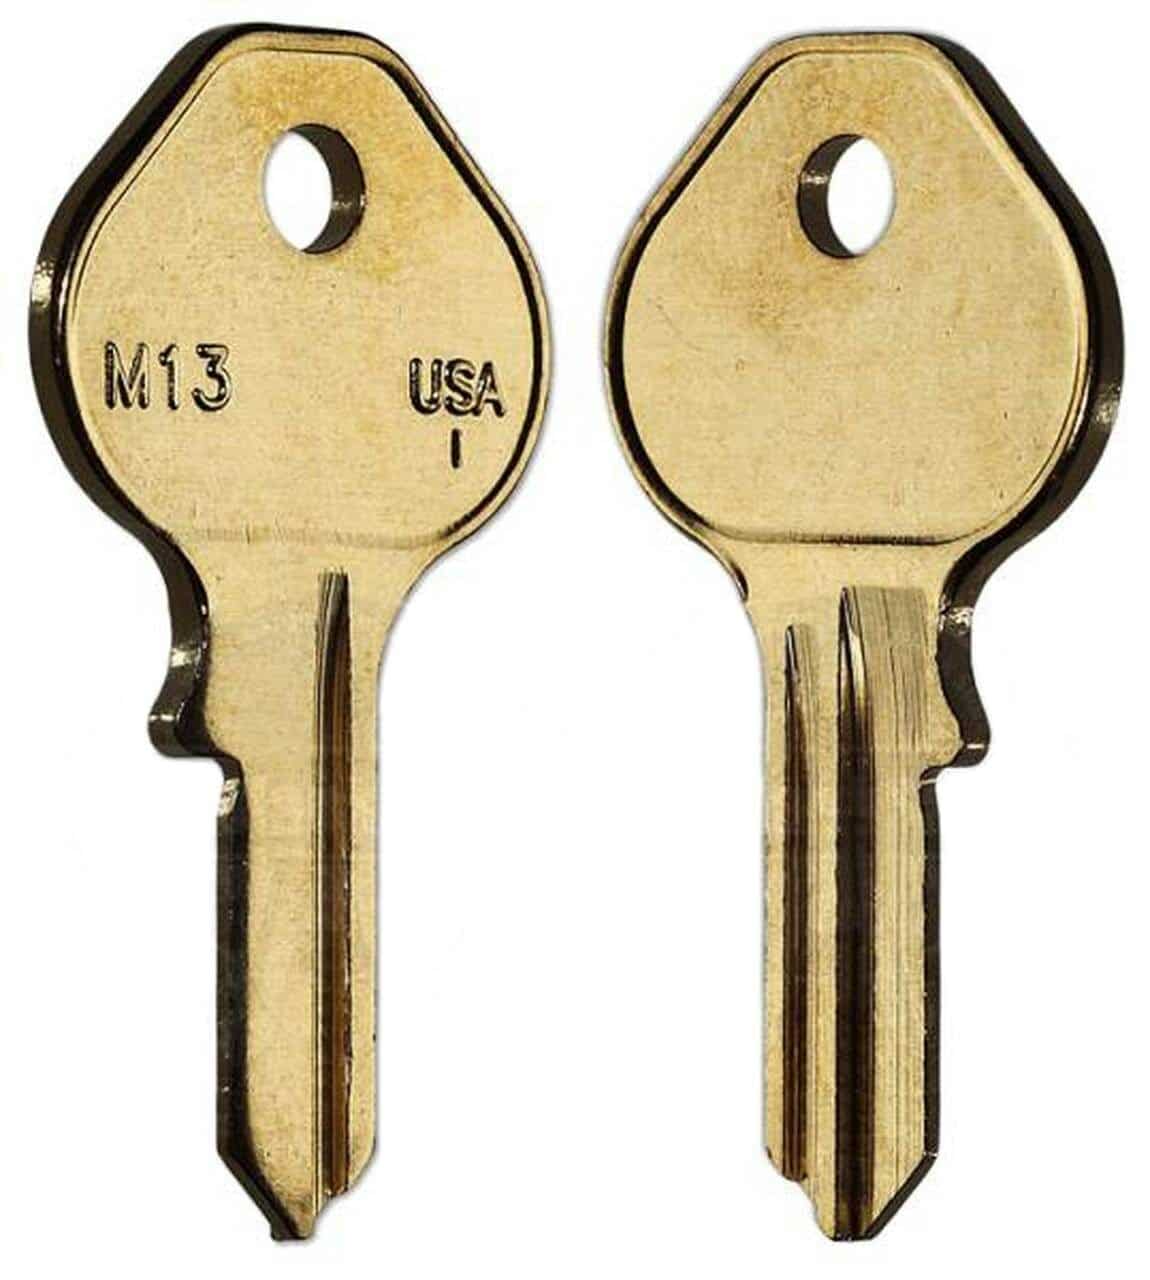 M13-BR Padlock key master